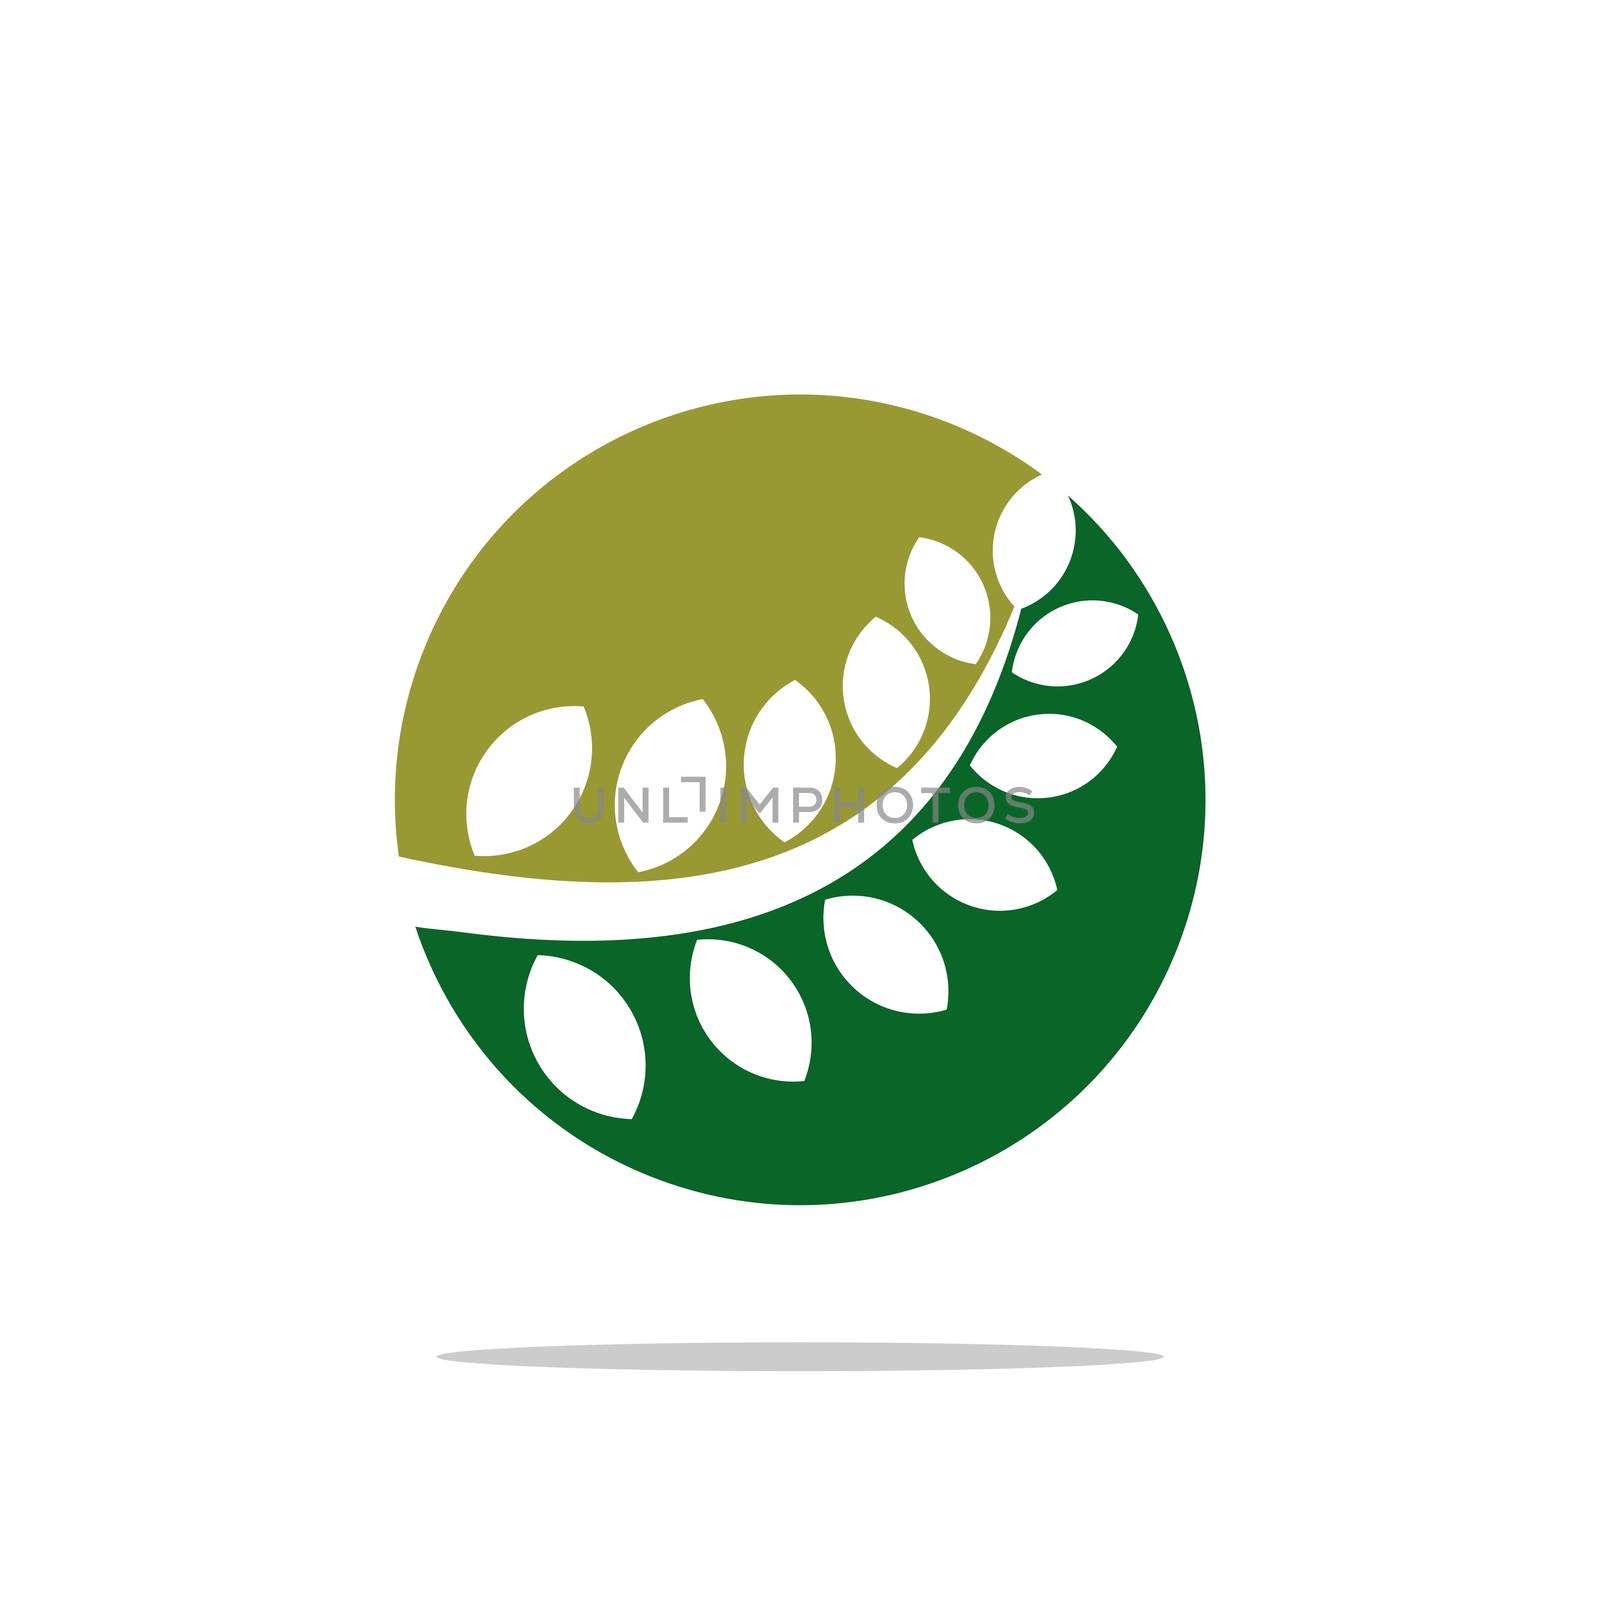 Green Leaves Circle Ornamental Logo Template Illustration Design EPS 10